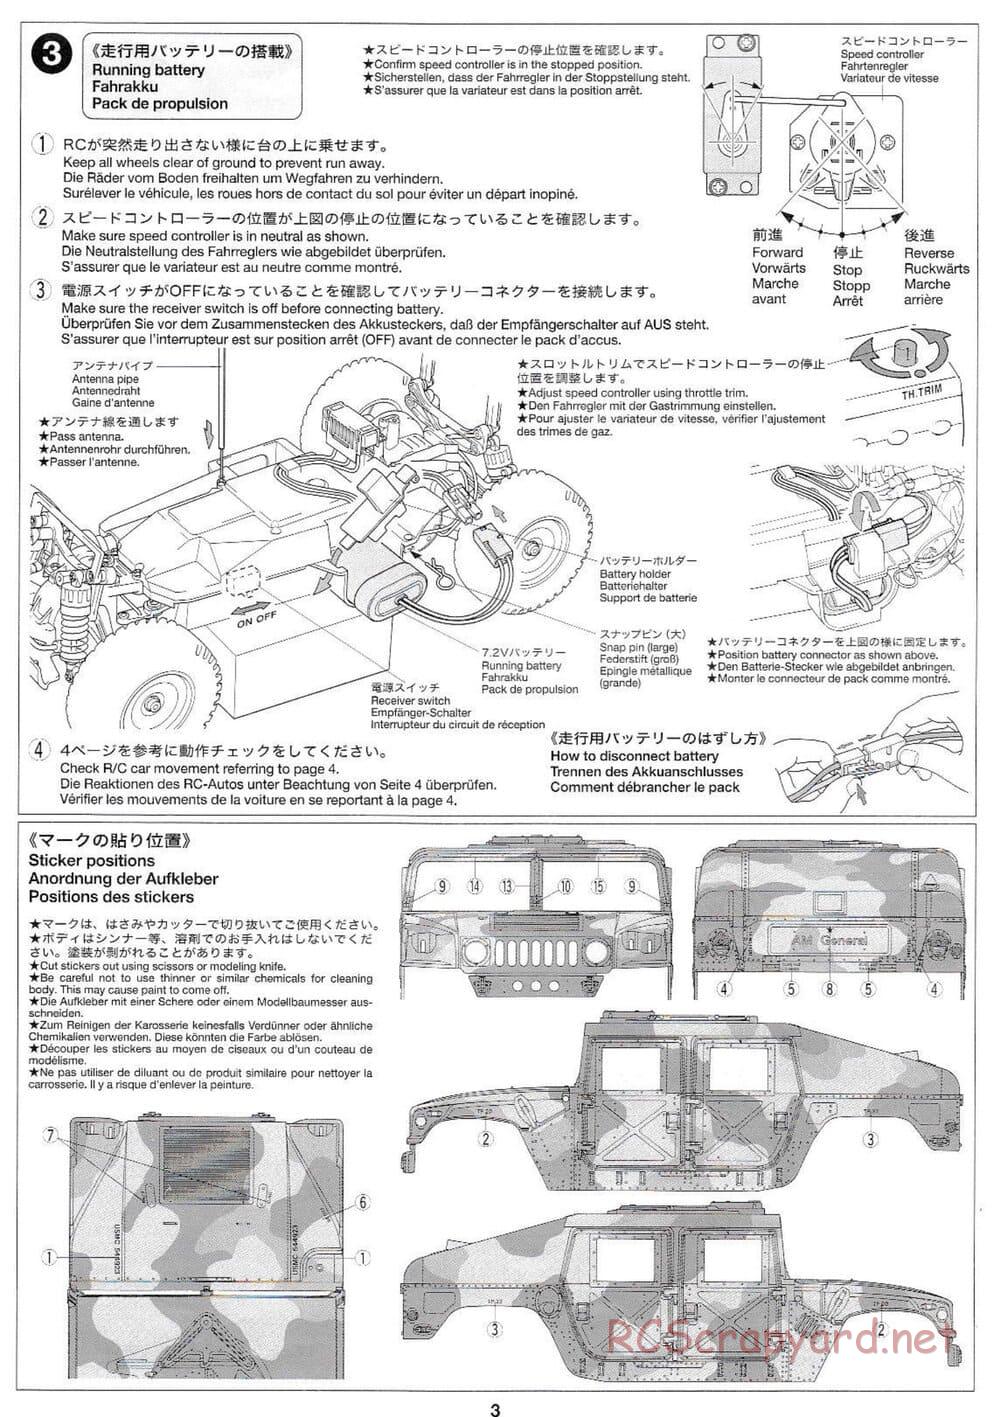 Tamiya - XB M1025 Humvee - DF-01 Chassis - Manual - Page 3